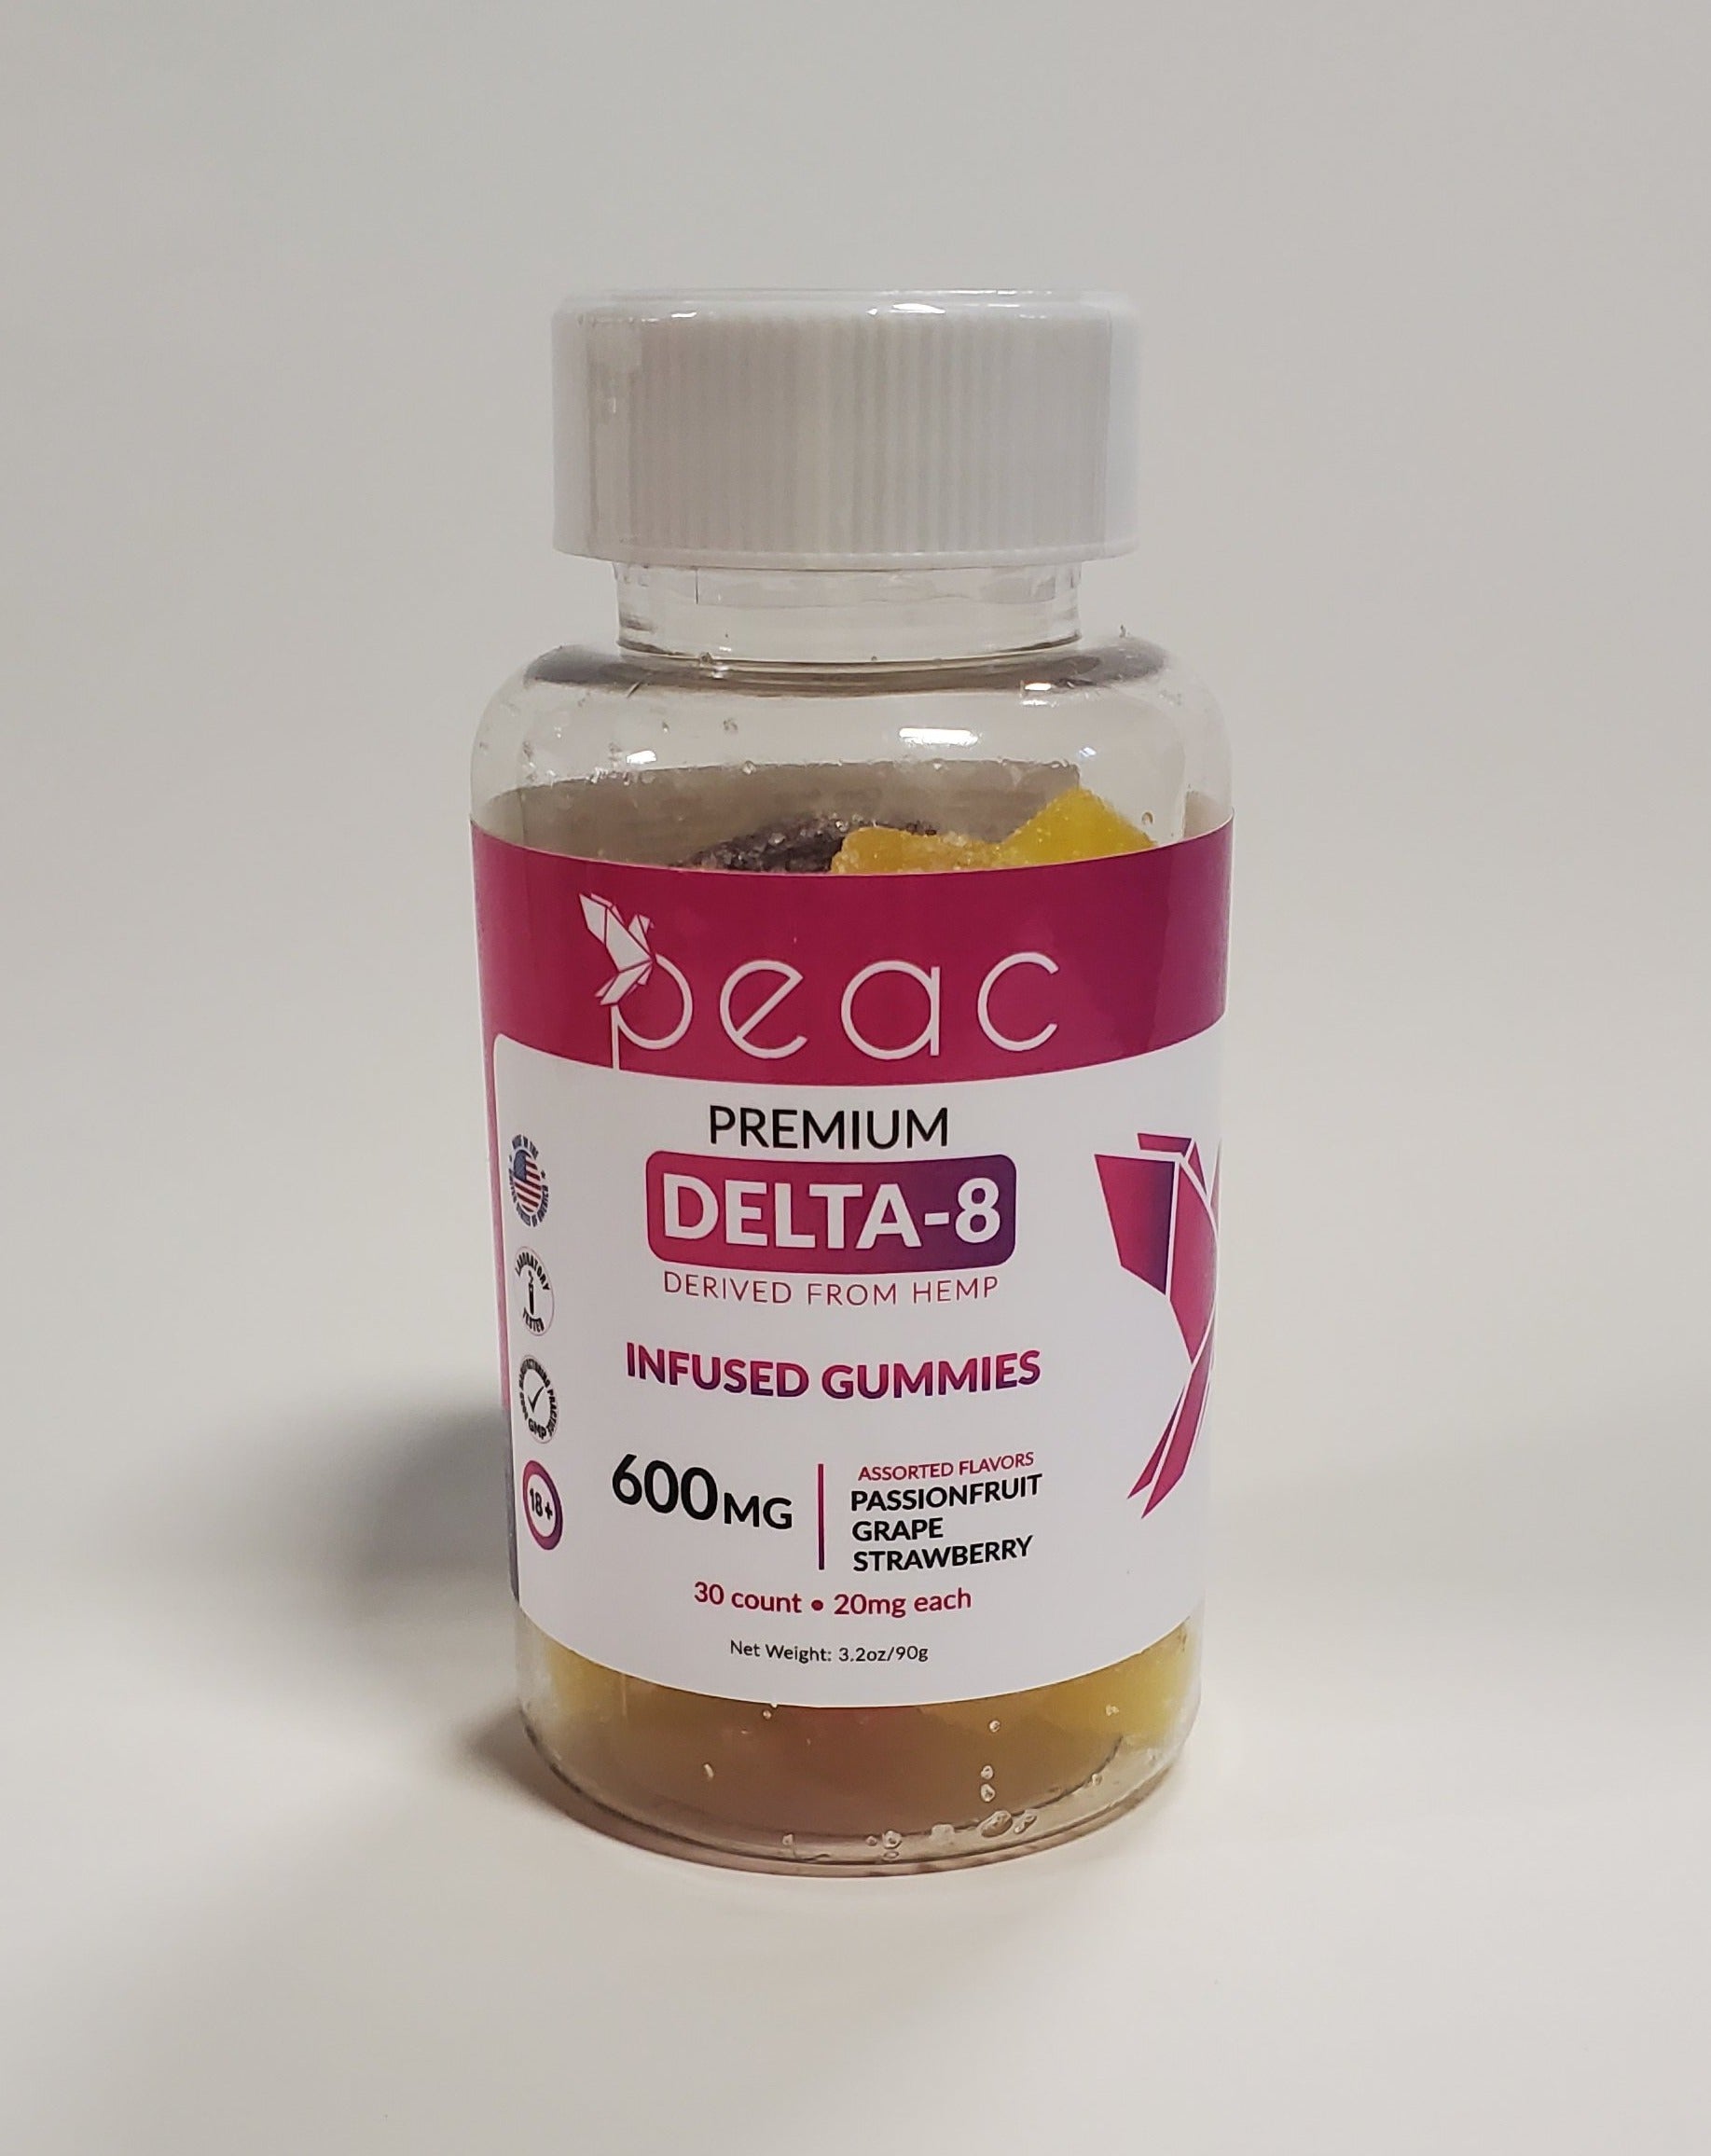 Wholesale Premium Delta 8 Infused Gummies 600mg - Peac Wellness